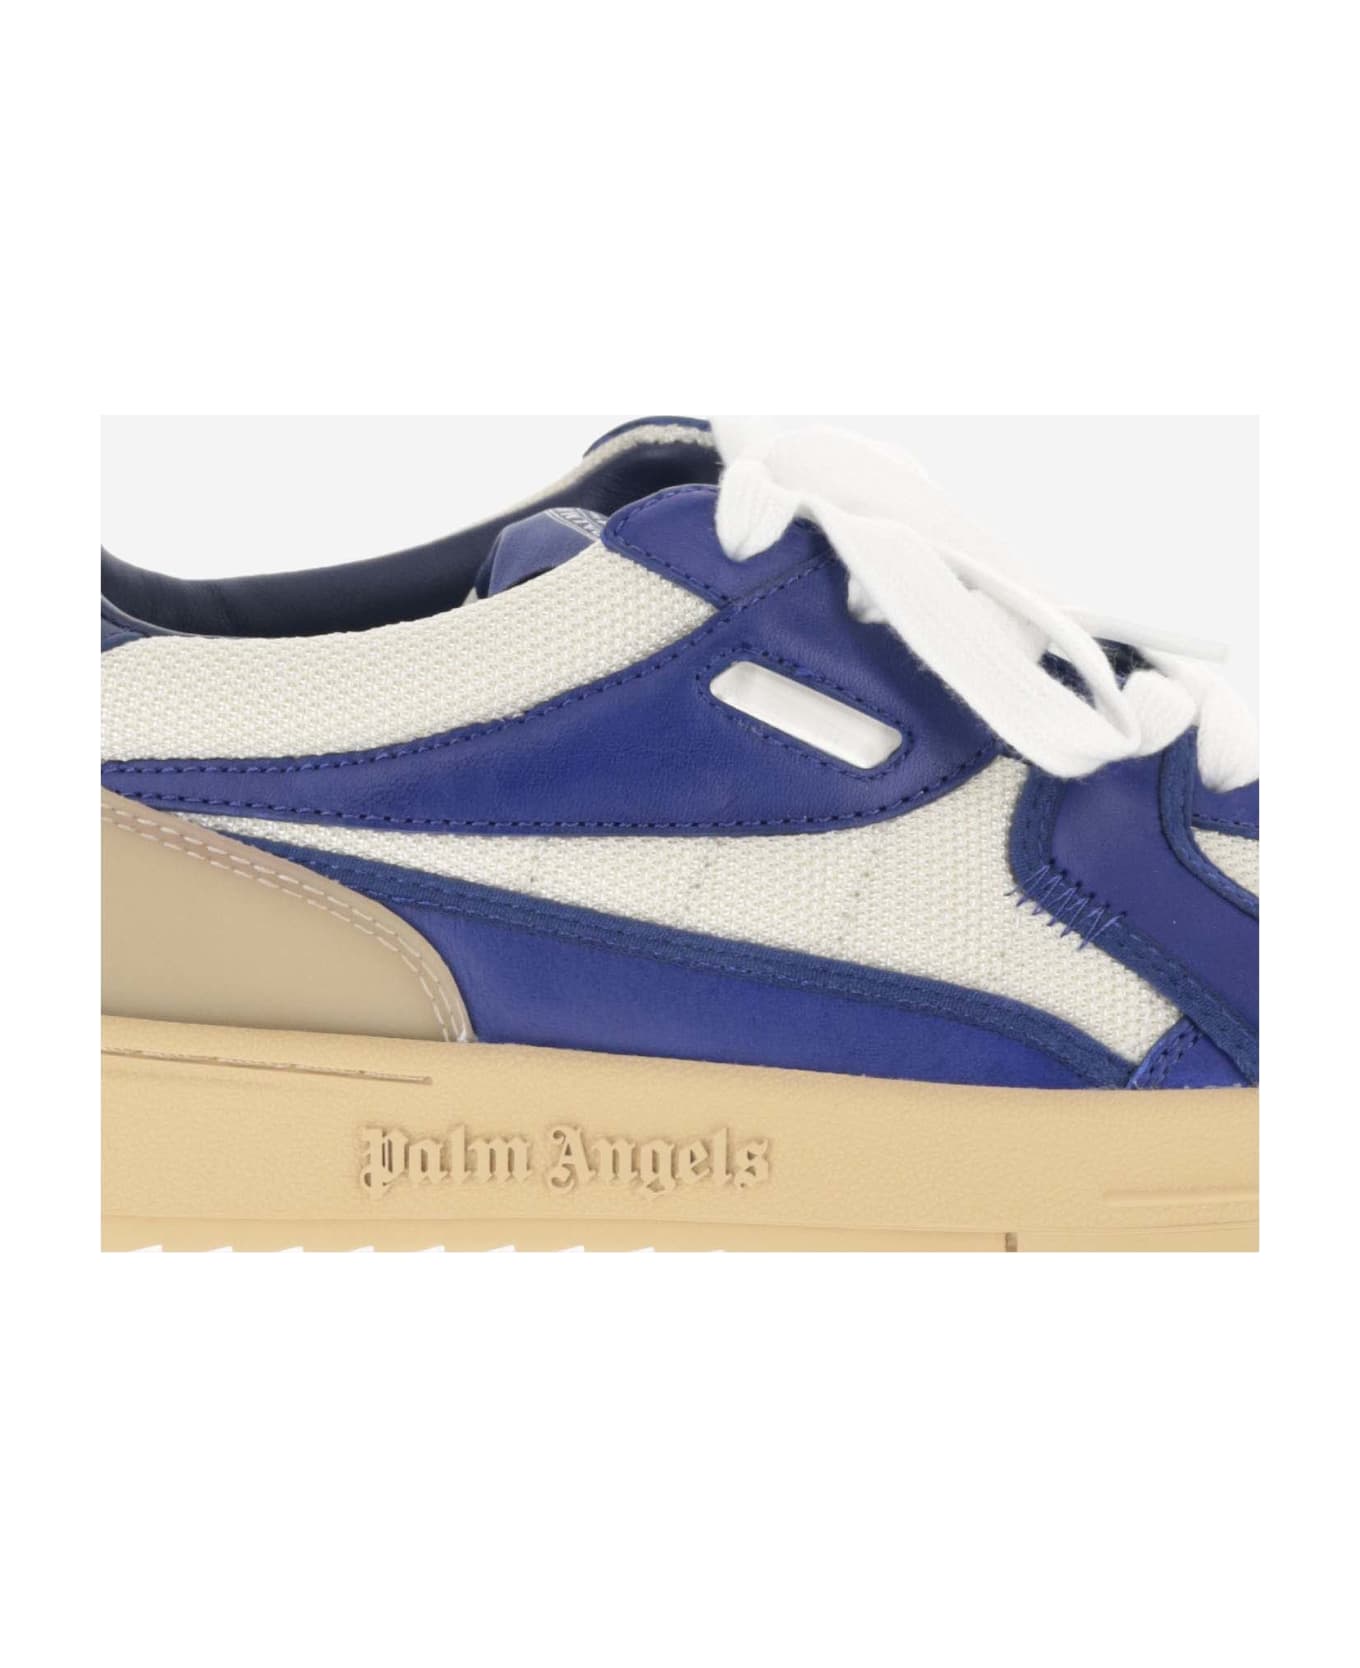 Palm Angels University Sneakers - Blue